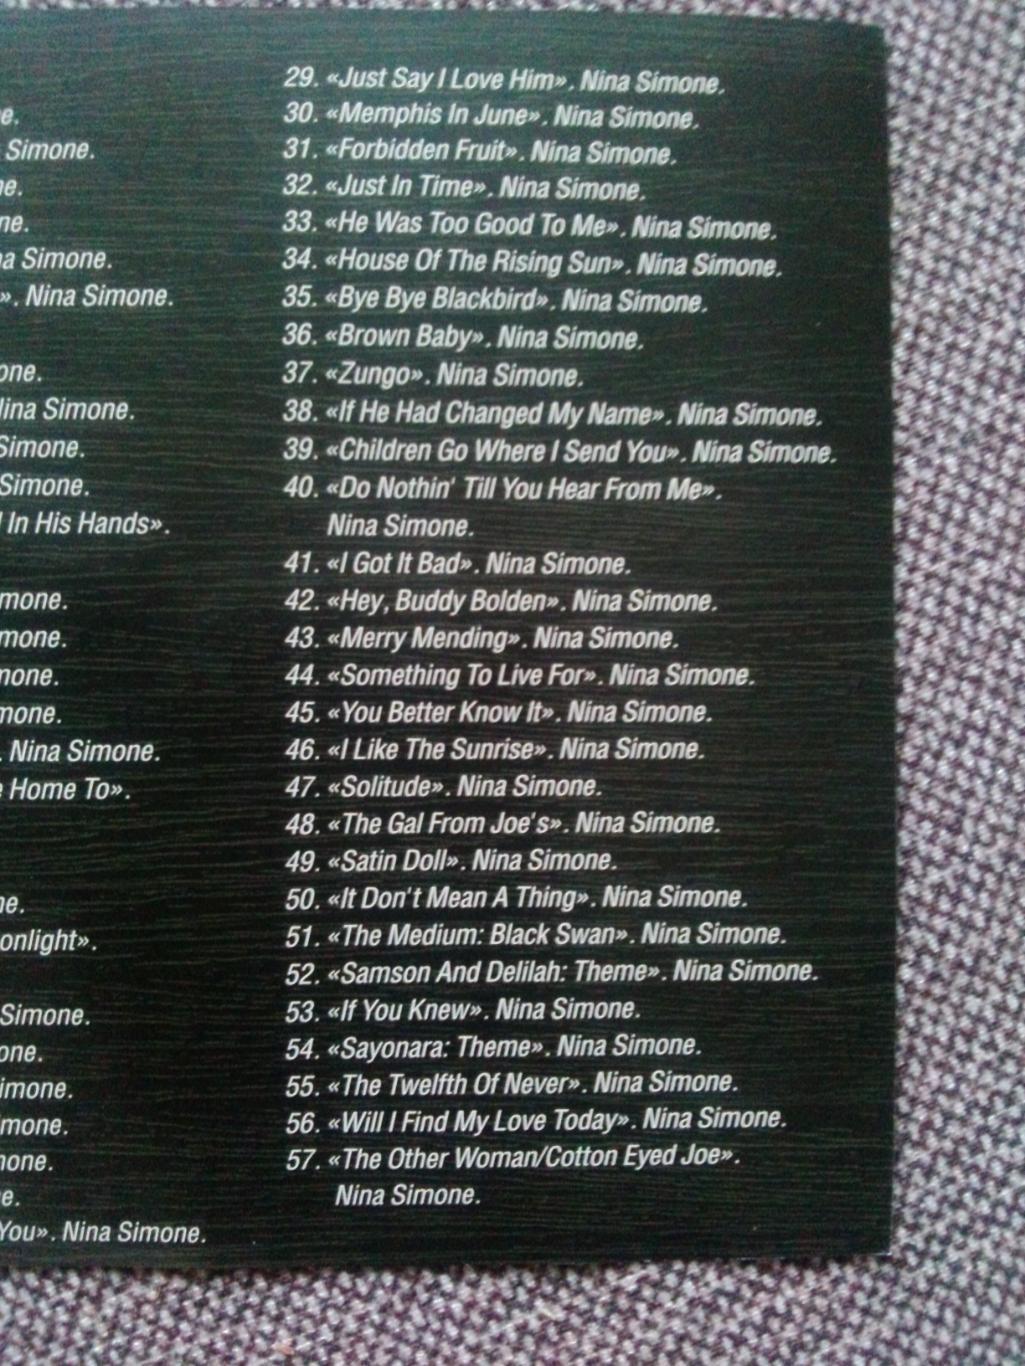 MP - 3 CD диск : Нина Симон (Nina Simone) 1958 - 1963 гг. (6 альбомов) Джаз-блюз 3